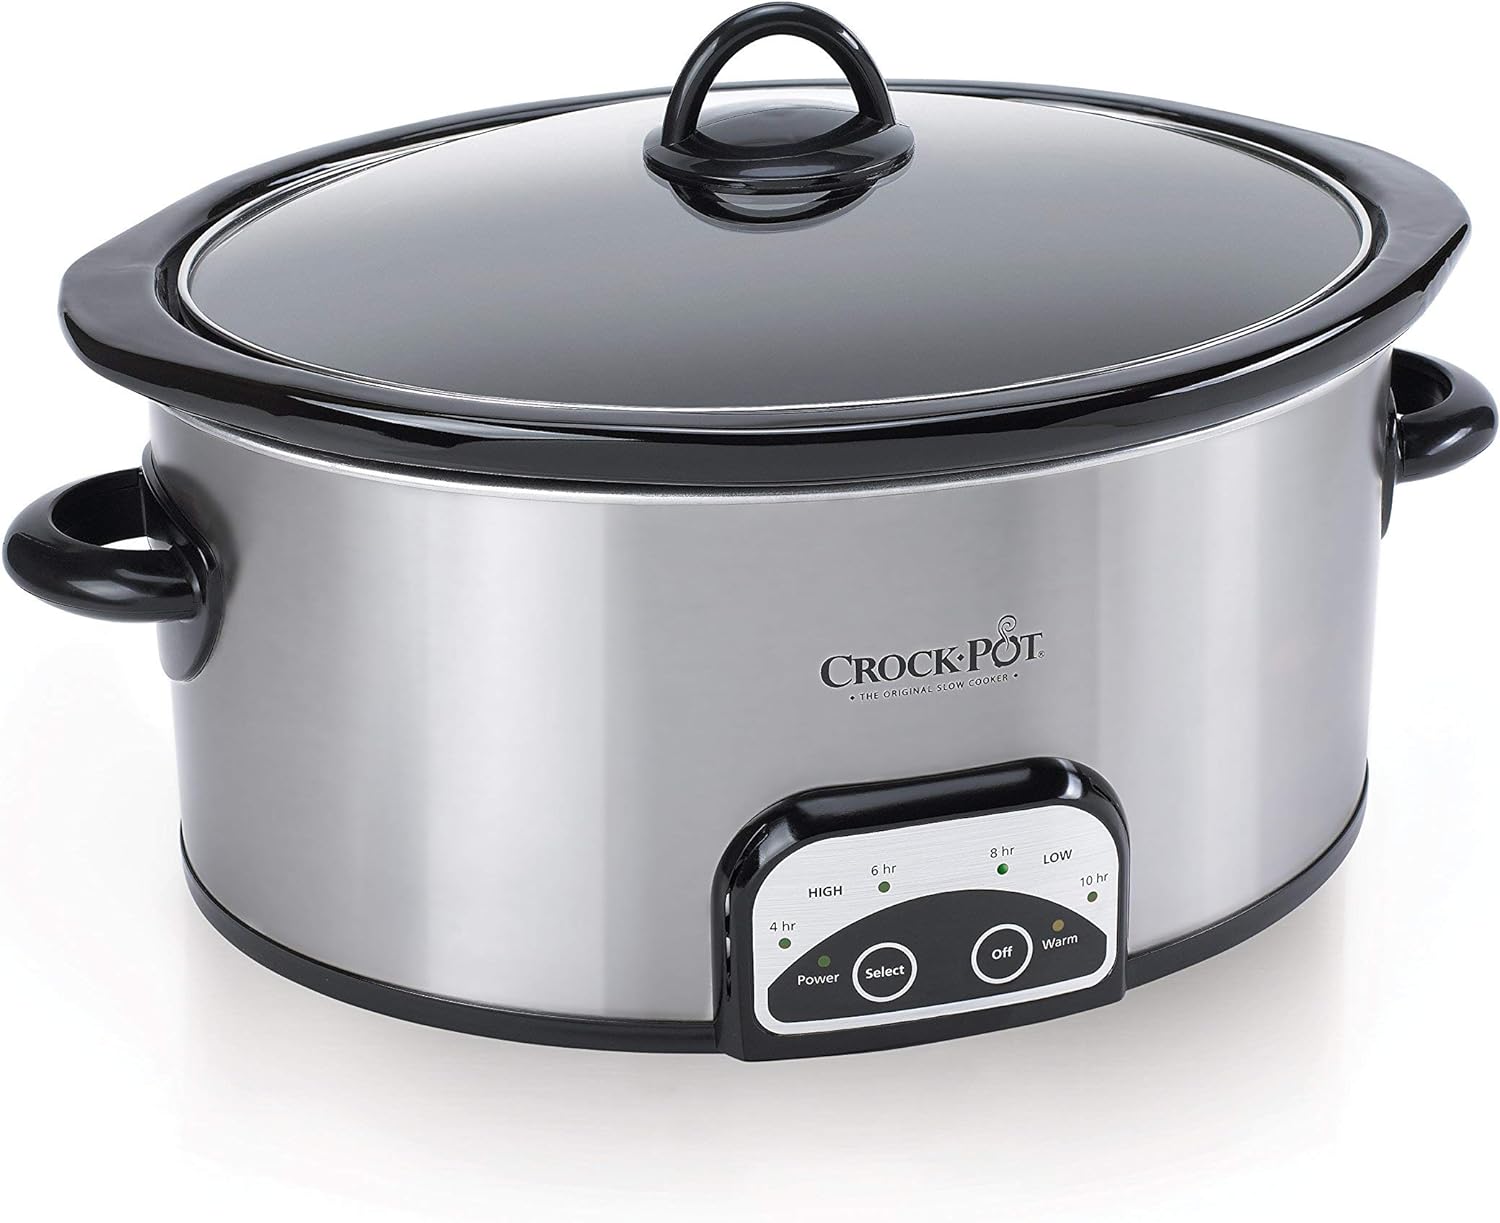 Crock-Pot Smart-Pot 6 Quart Programmable Slow Cooker with Timer, Food Warmer, Brushed Stainless Steel (SCCPVP600-S)